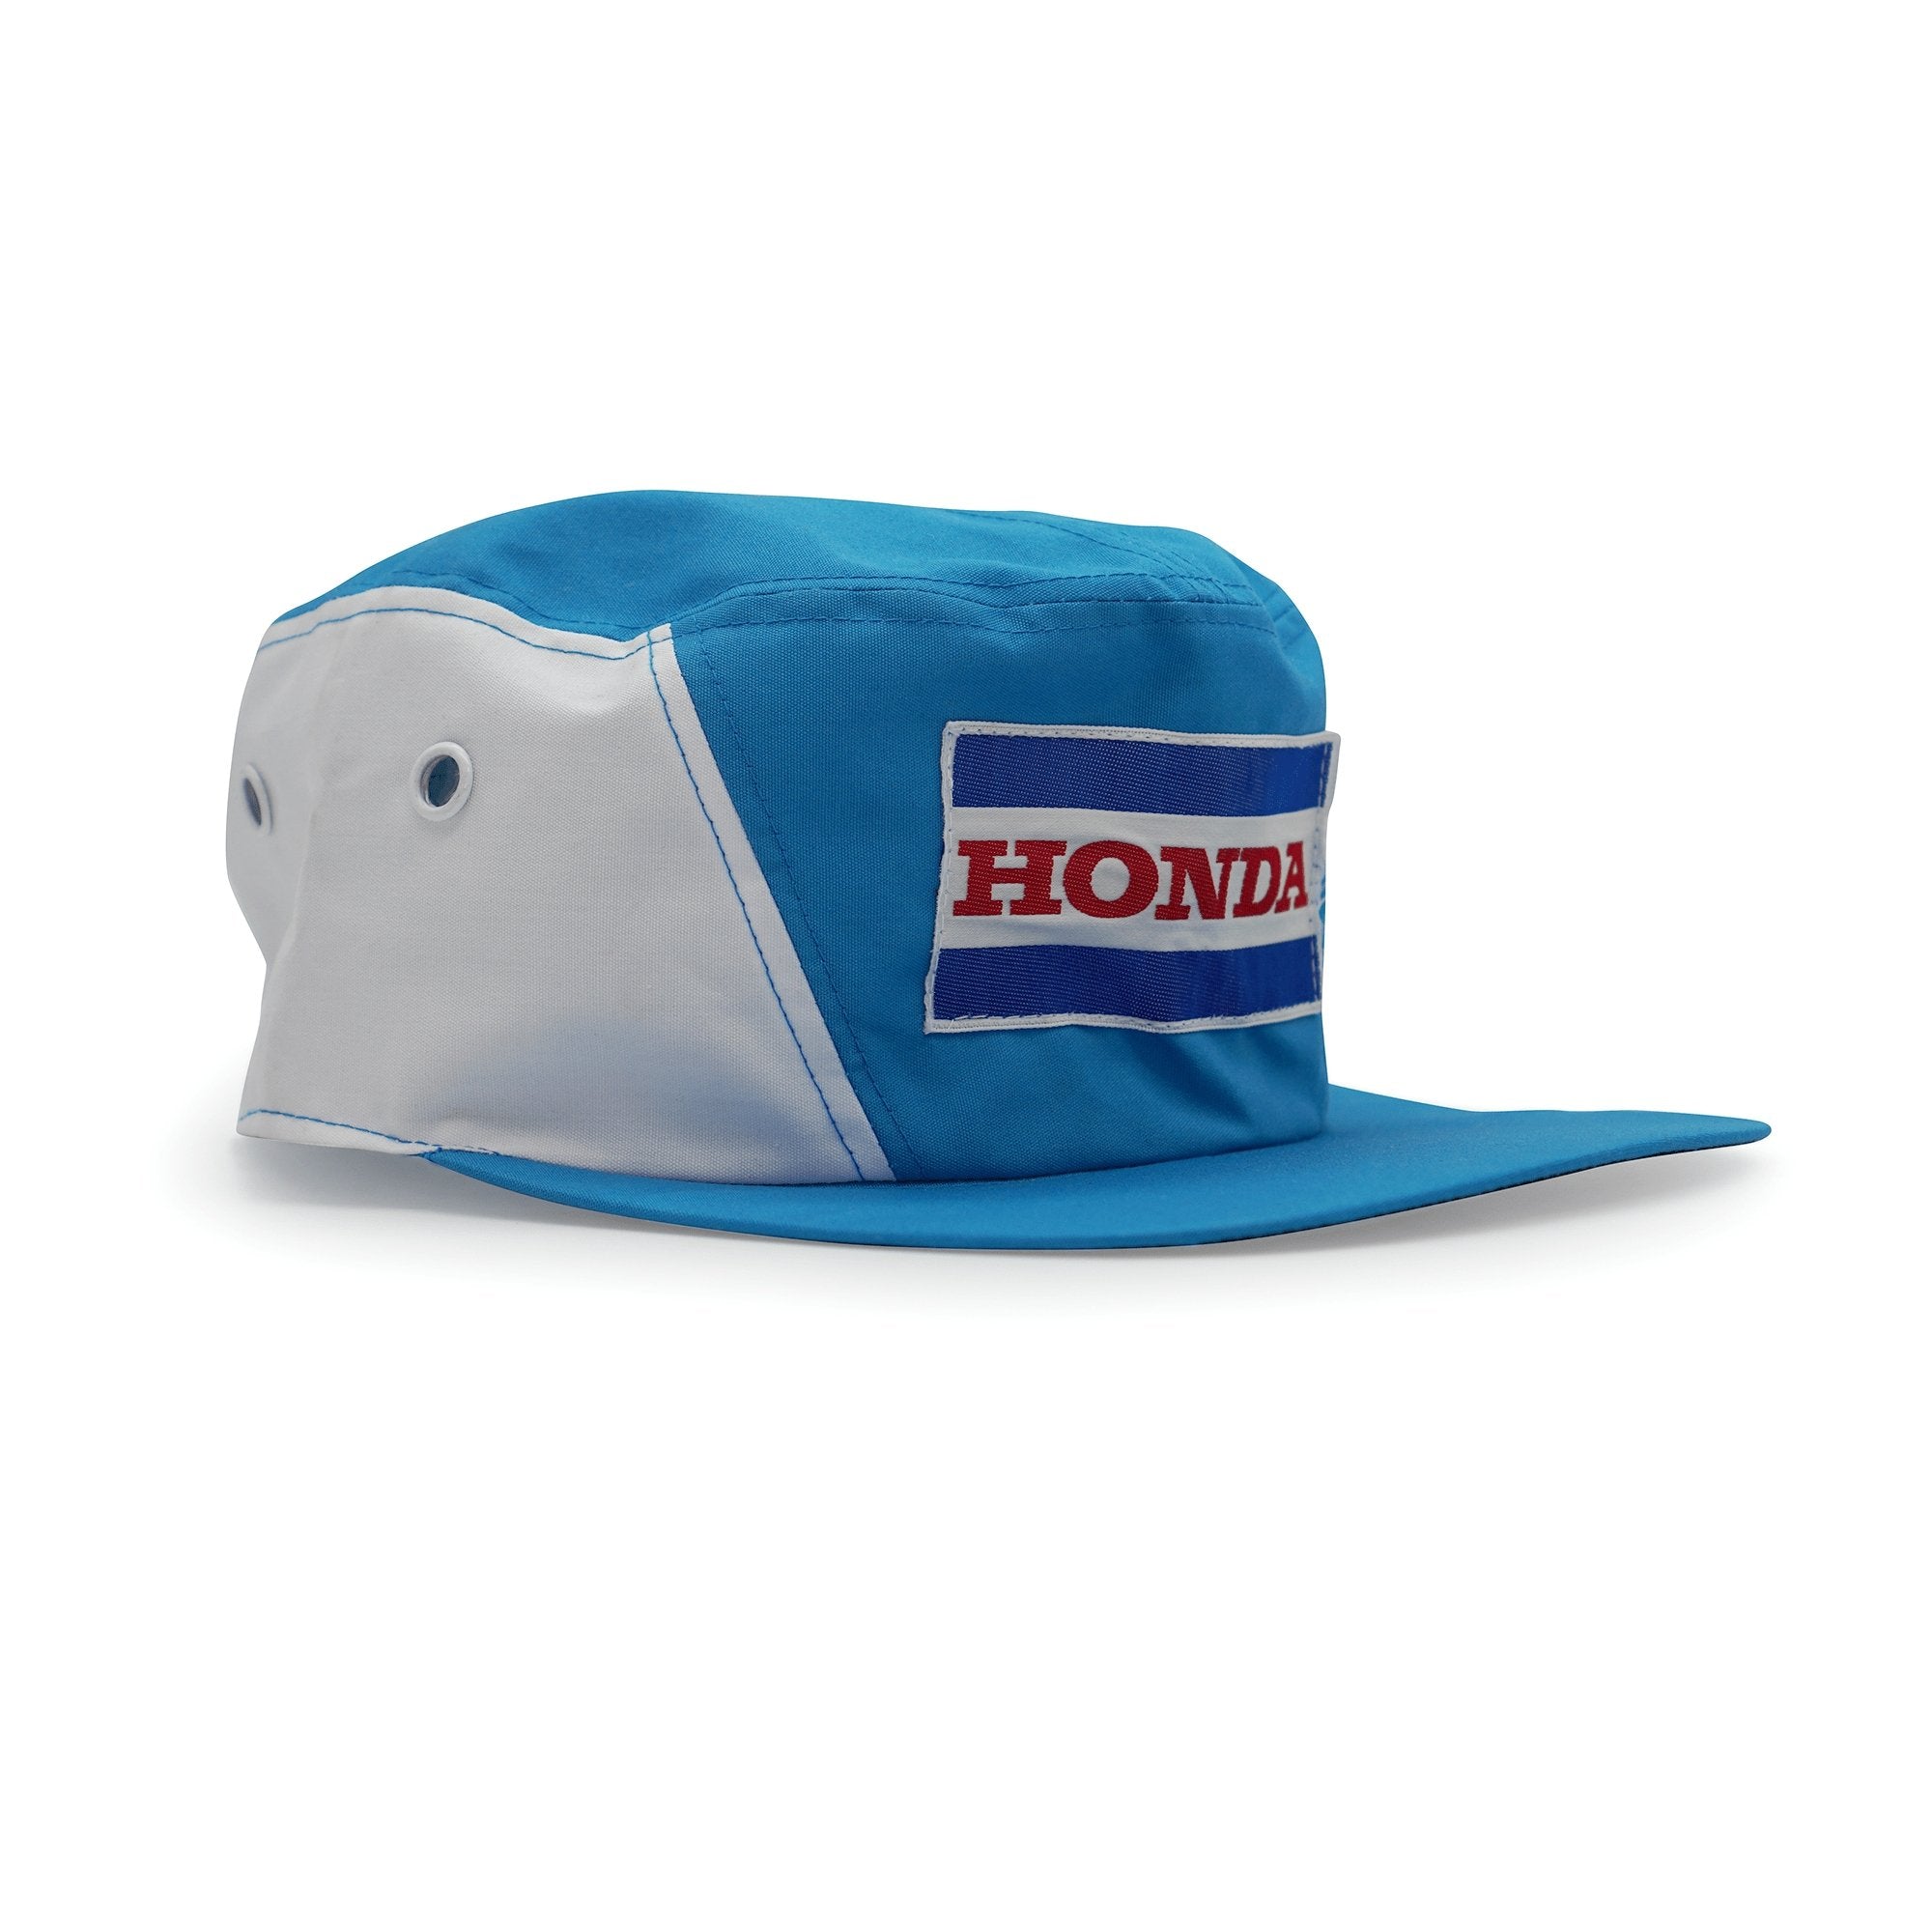 JDM Showa Vintage Japan Honda Motors Mechanic Hat Cap Blue